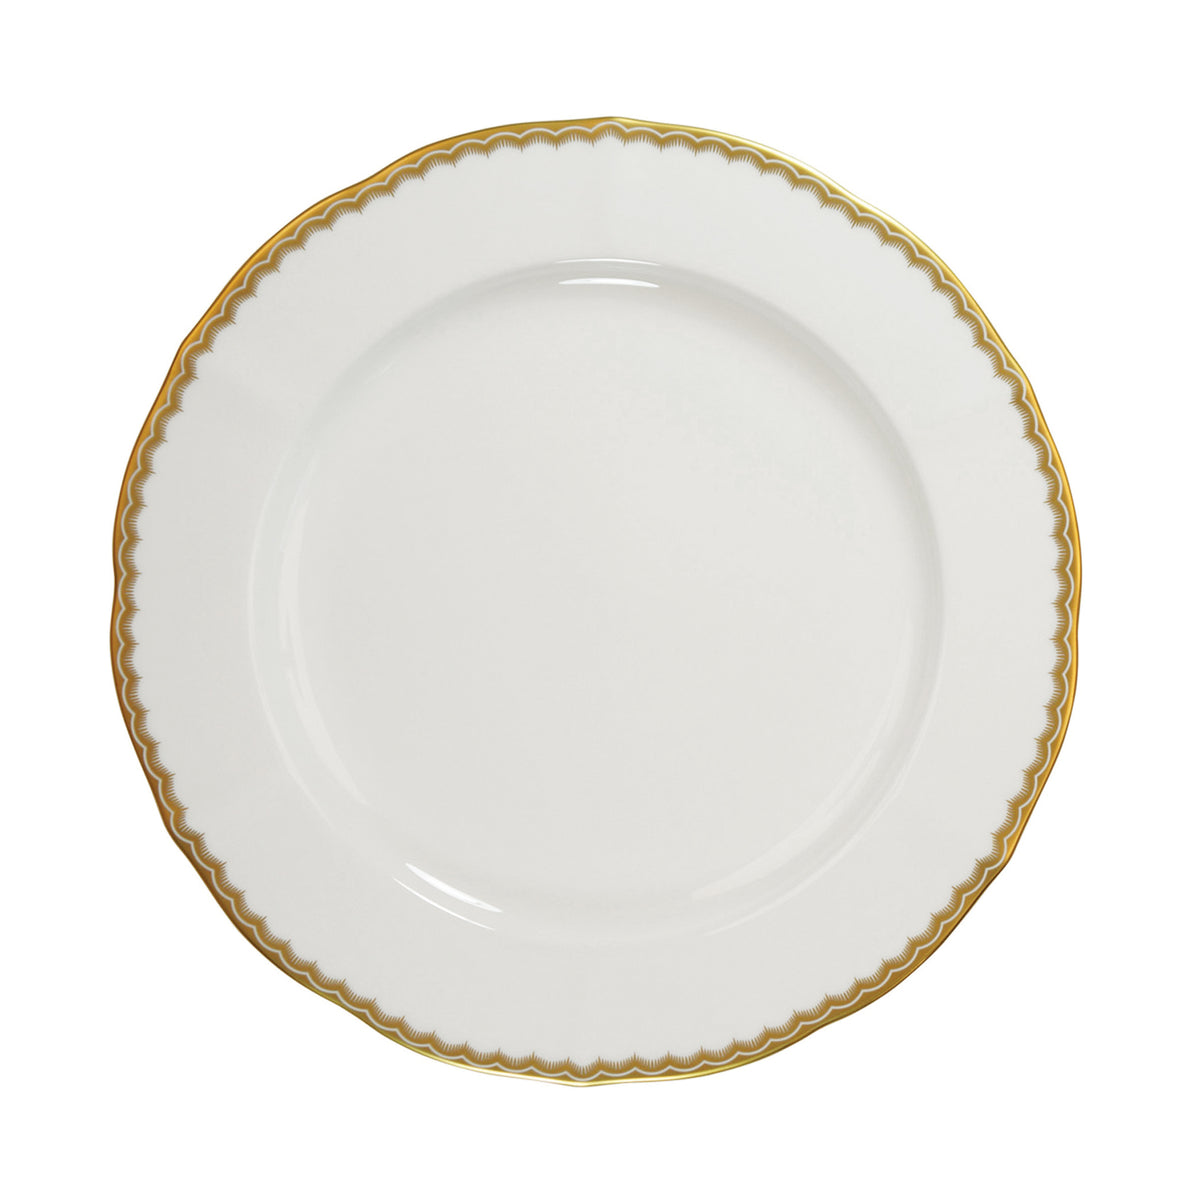 Prouna Antique Gold dinner plate